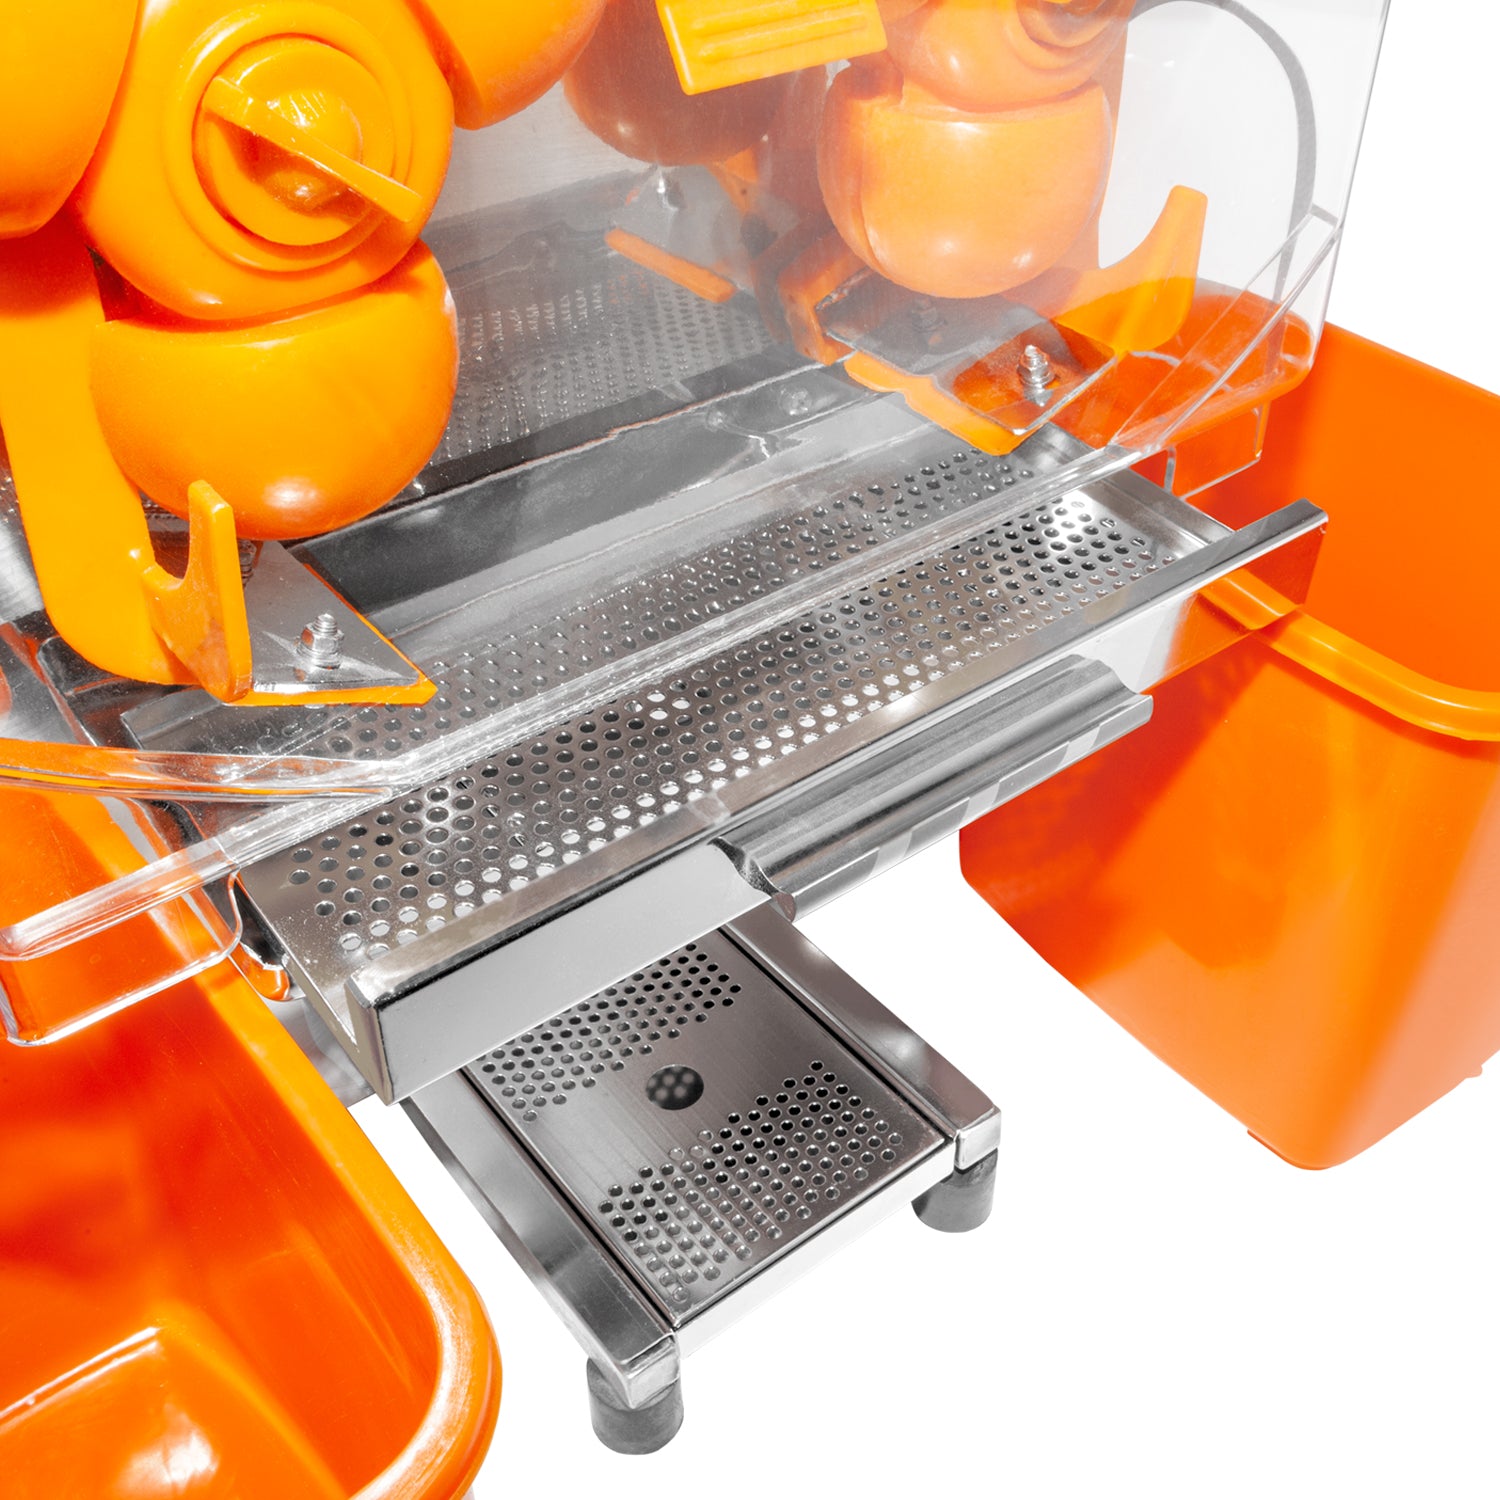 GorillaRock Juicer Machine | Fruit and Vegetables Juice Maker | Stainless Steel | Commercial Juice Extractor 110V